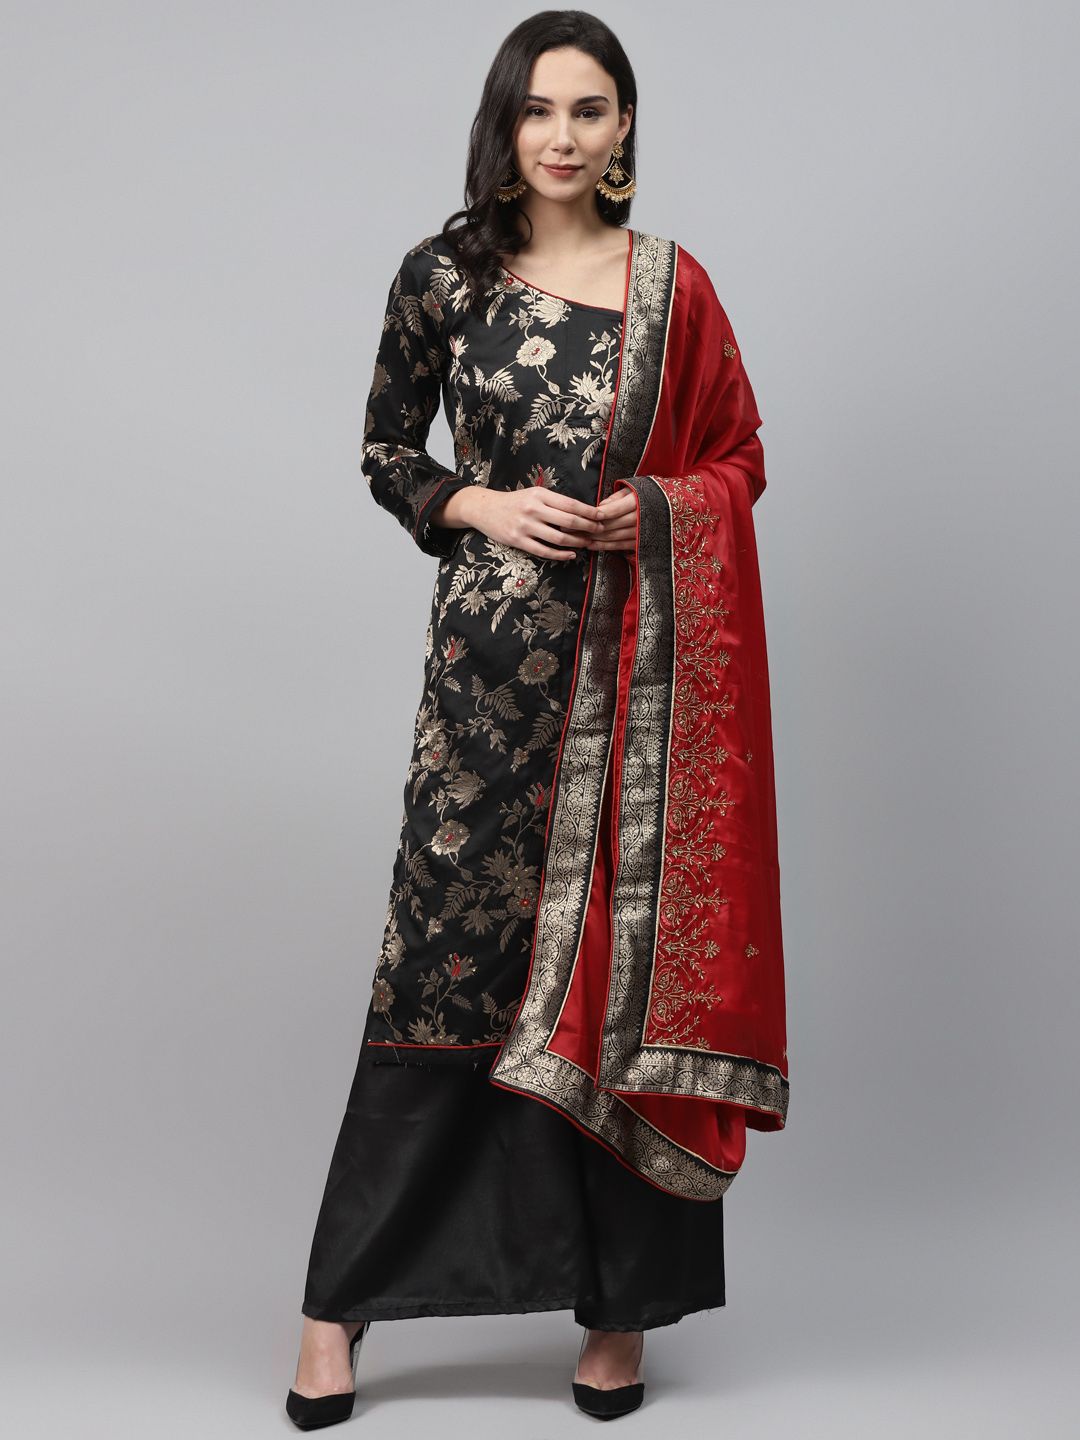 Readiprint Fashions Black & Golden Art Silk Semi-Stitched Dress Material Price in India